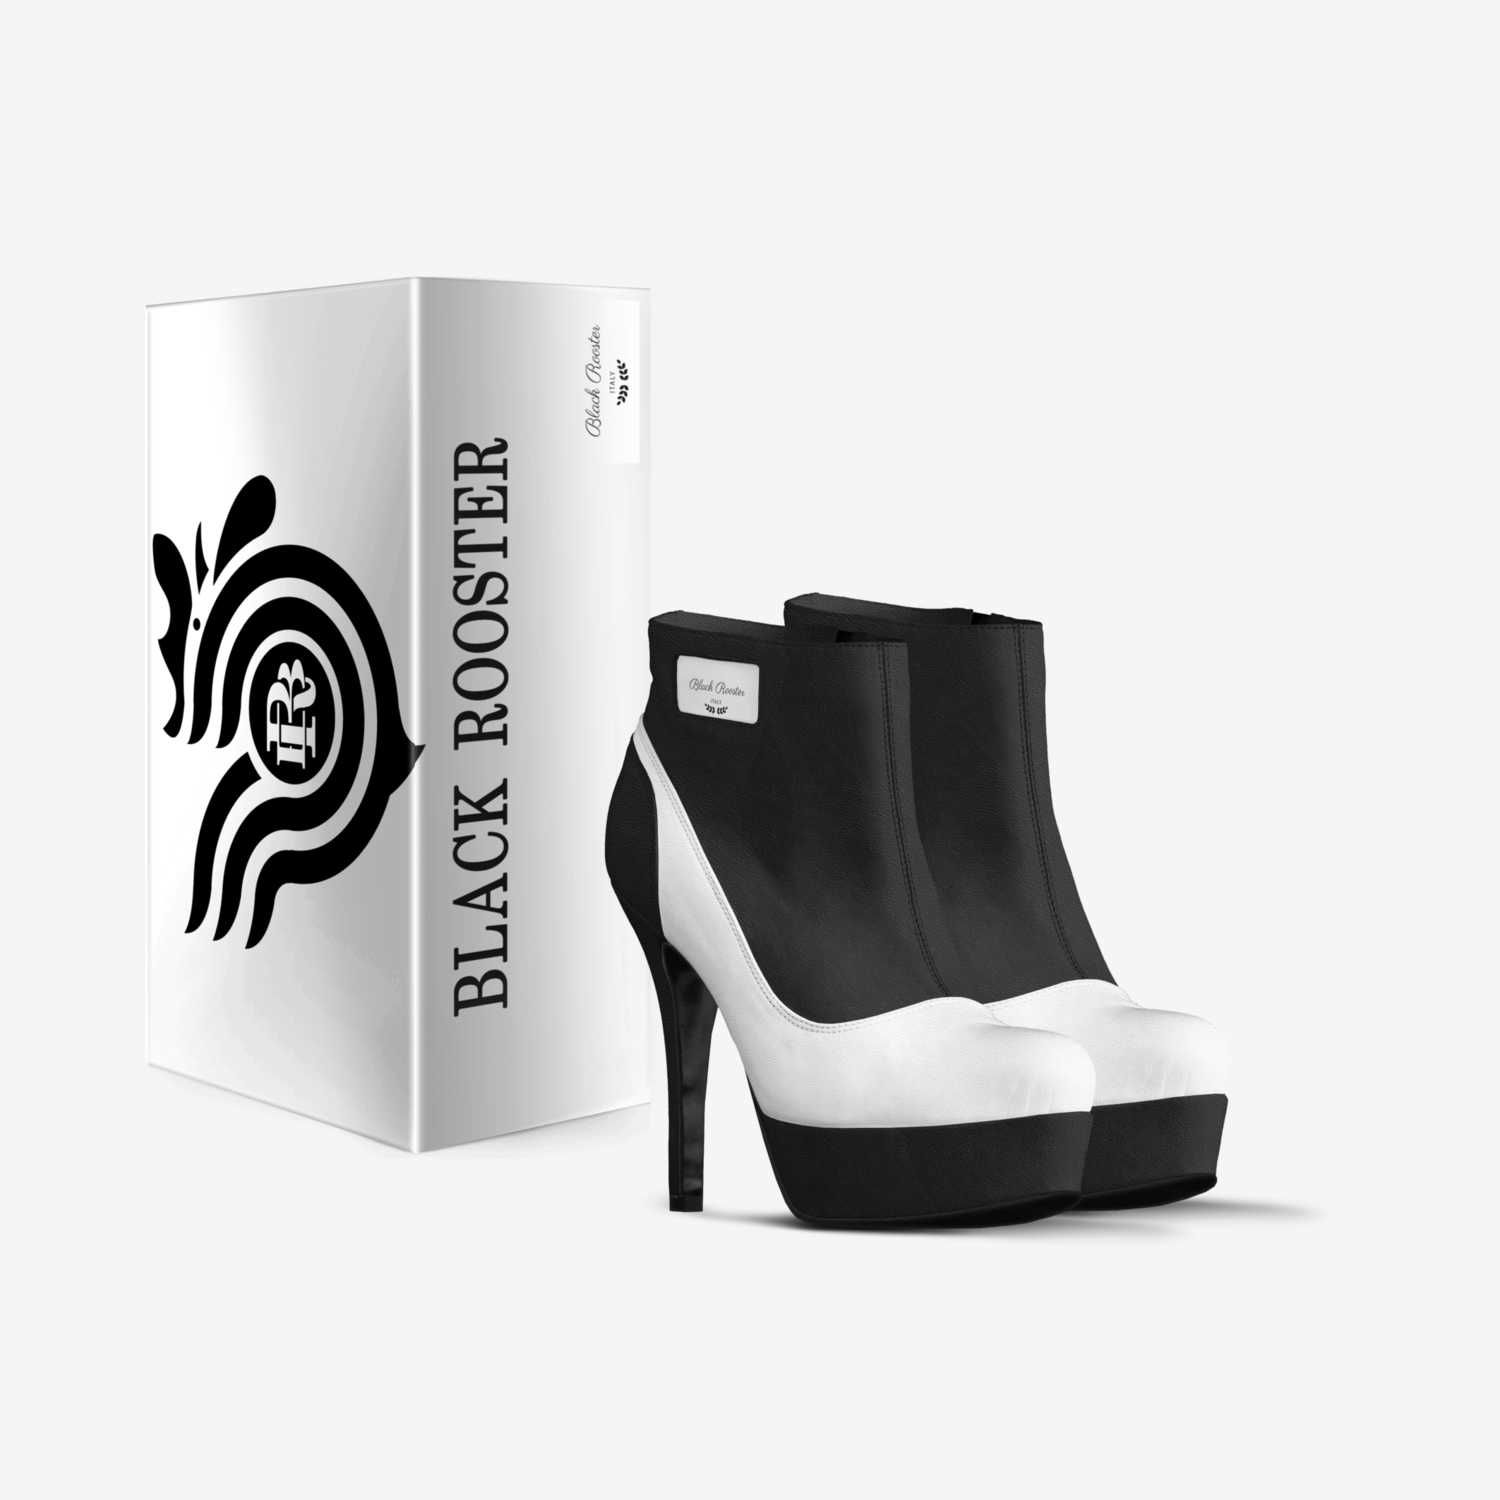 BR Heel custom made in Italy shoes by Terri Jones Salter | Box view